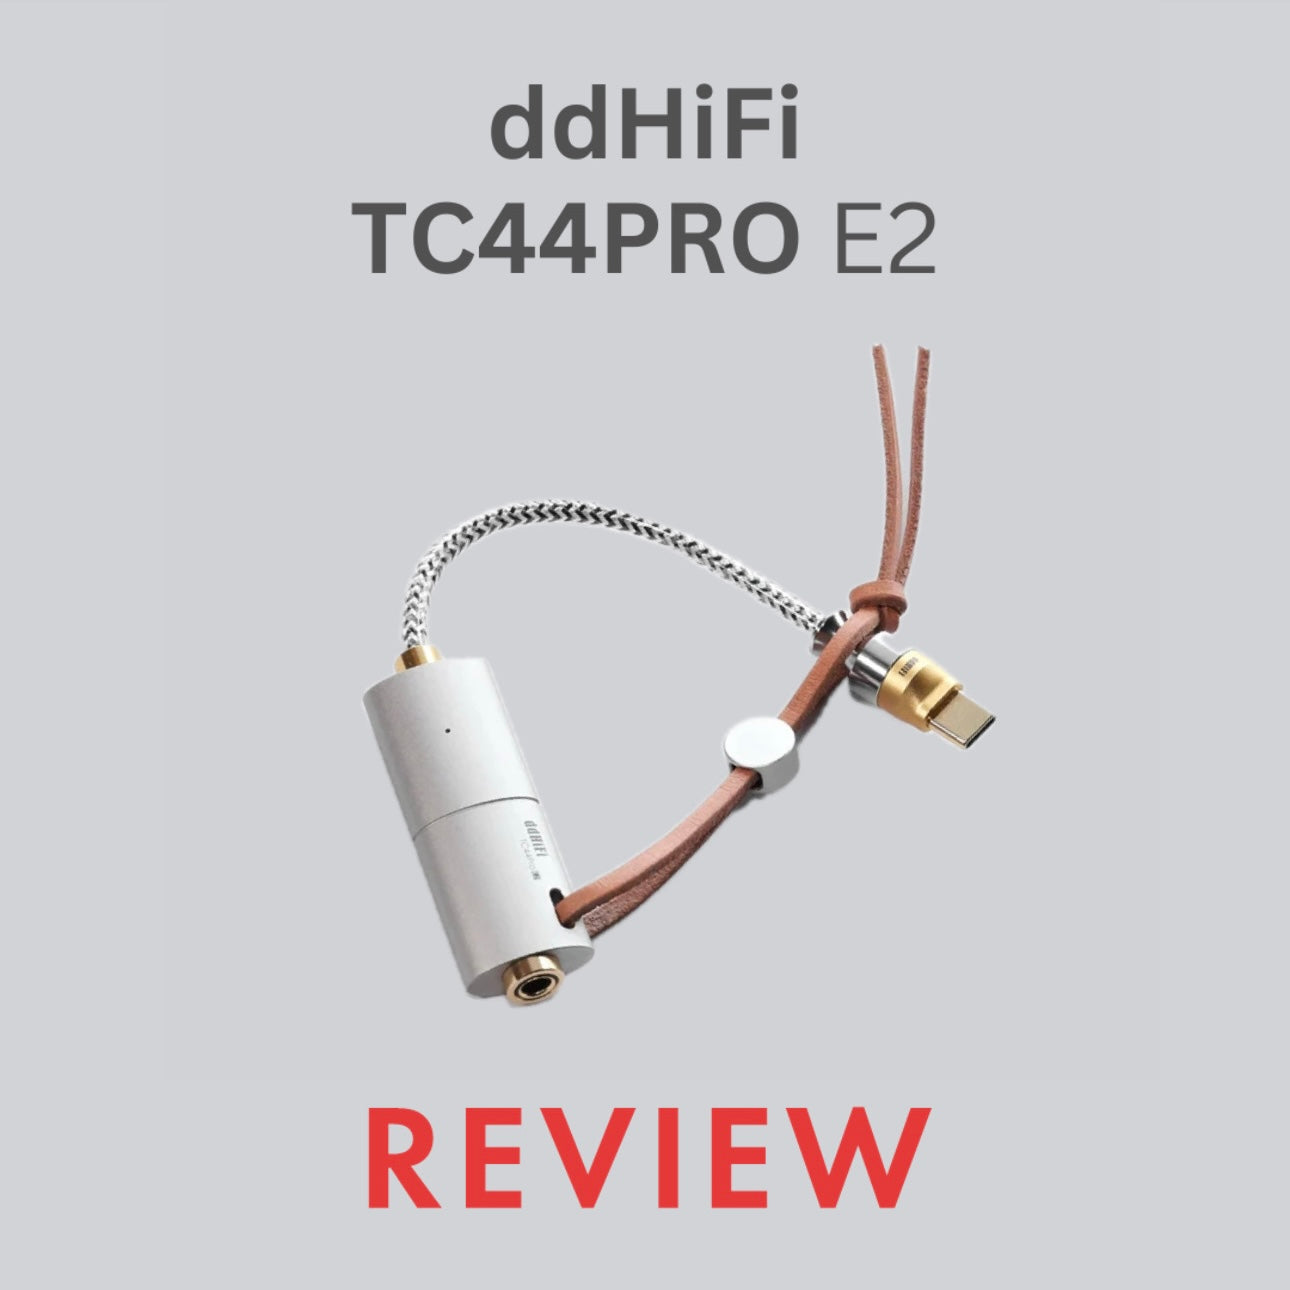 ddHiFi TC44PRO E2 Review